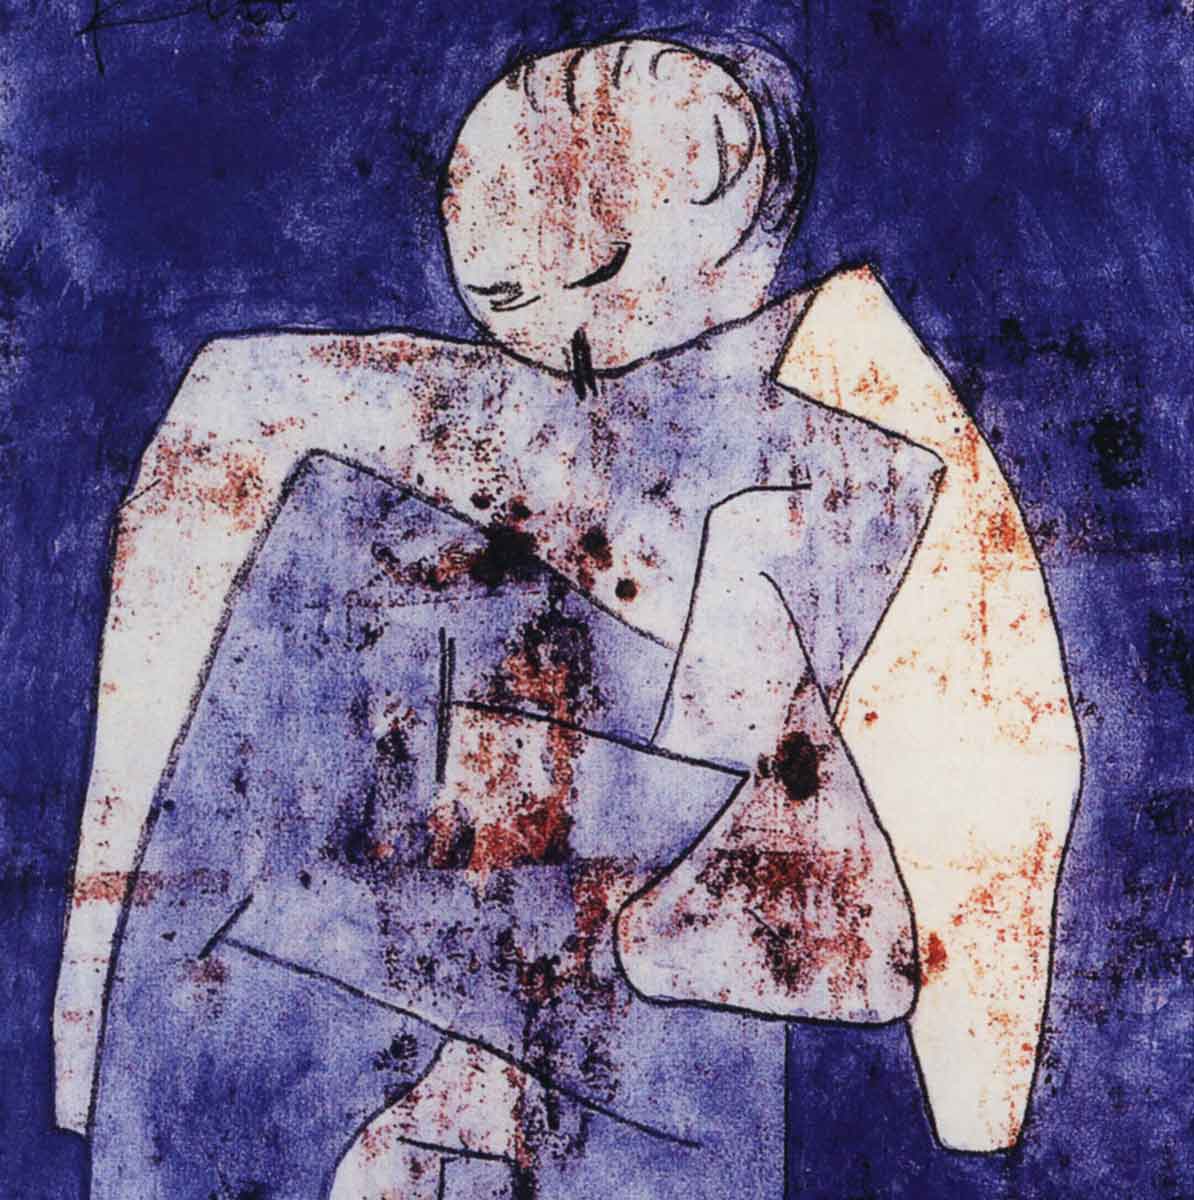 The distinctive art style of Paul Klee.